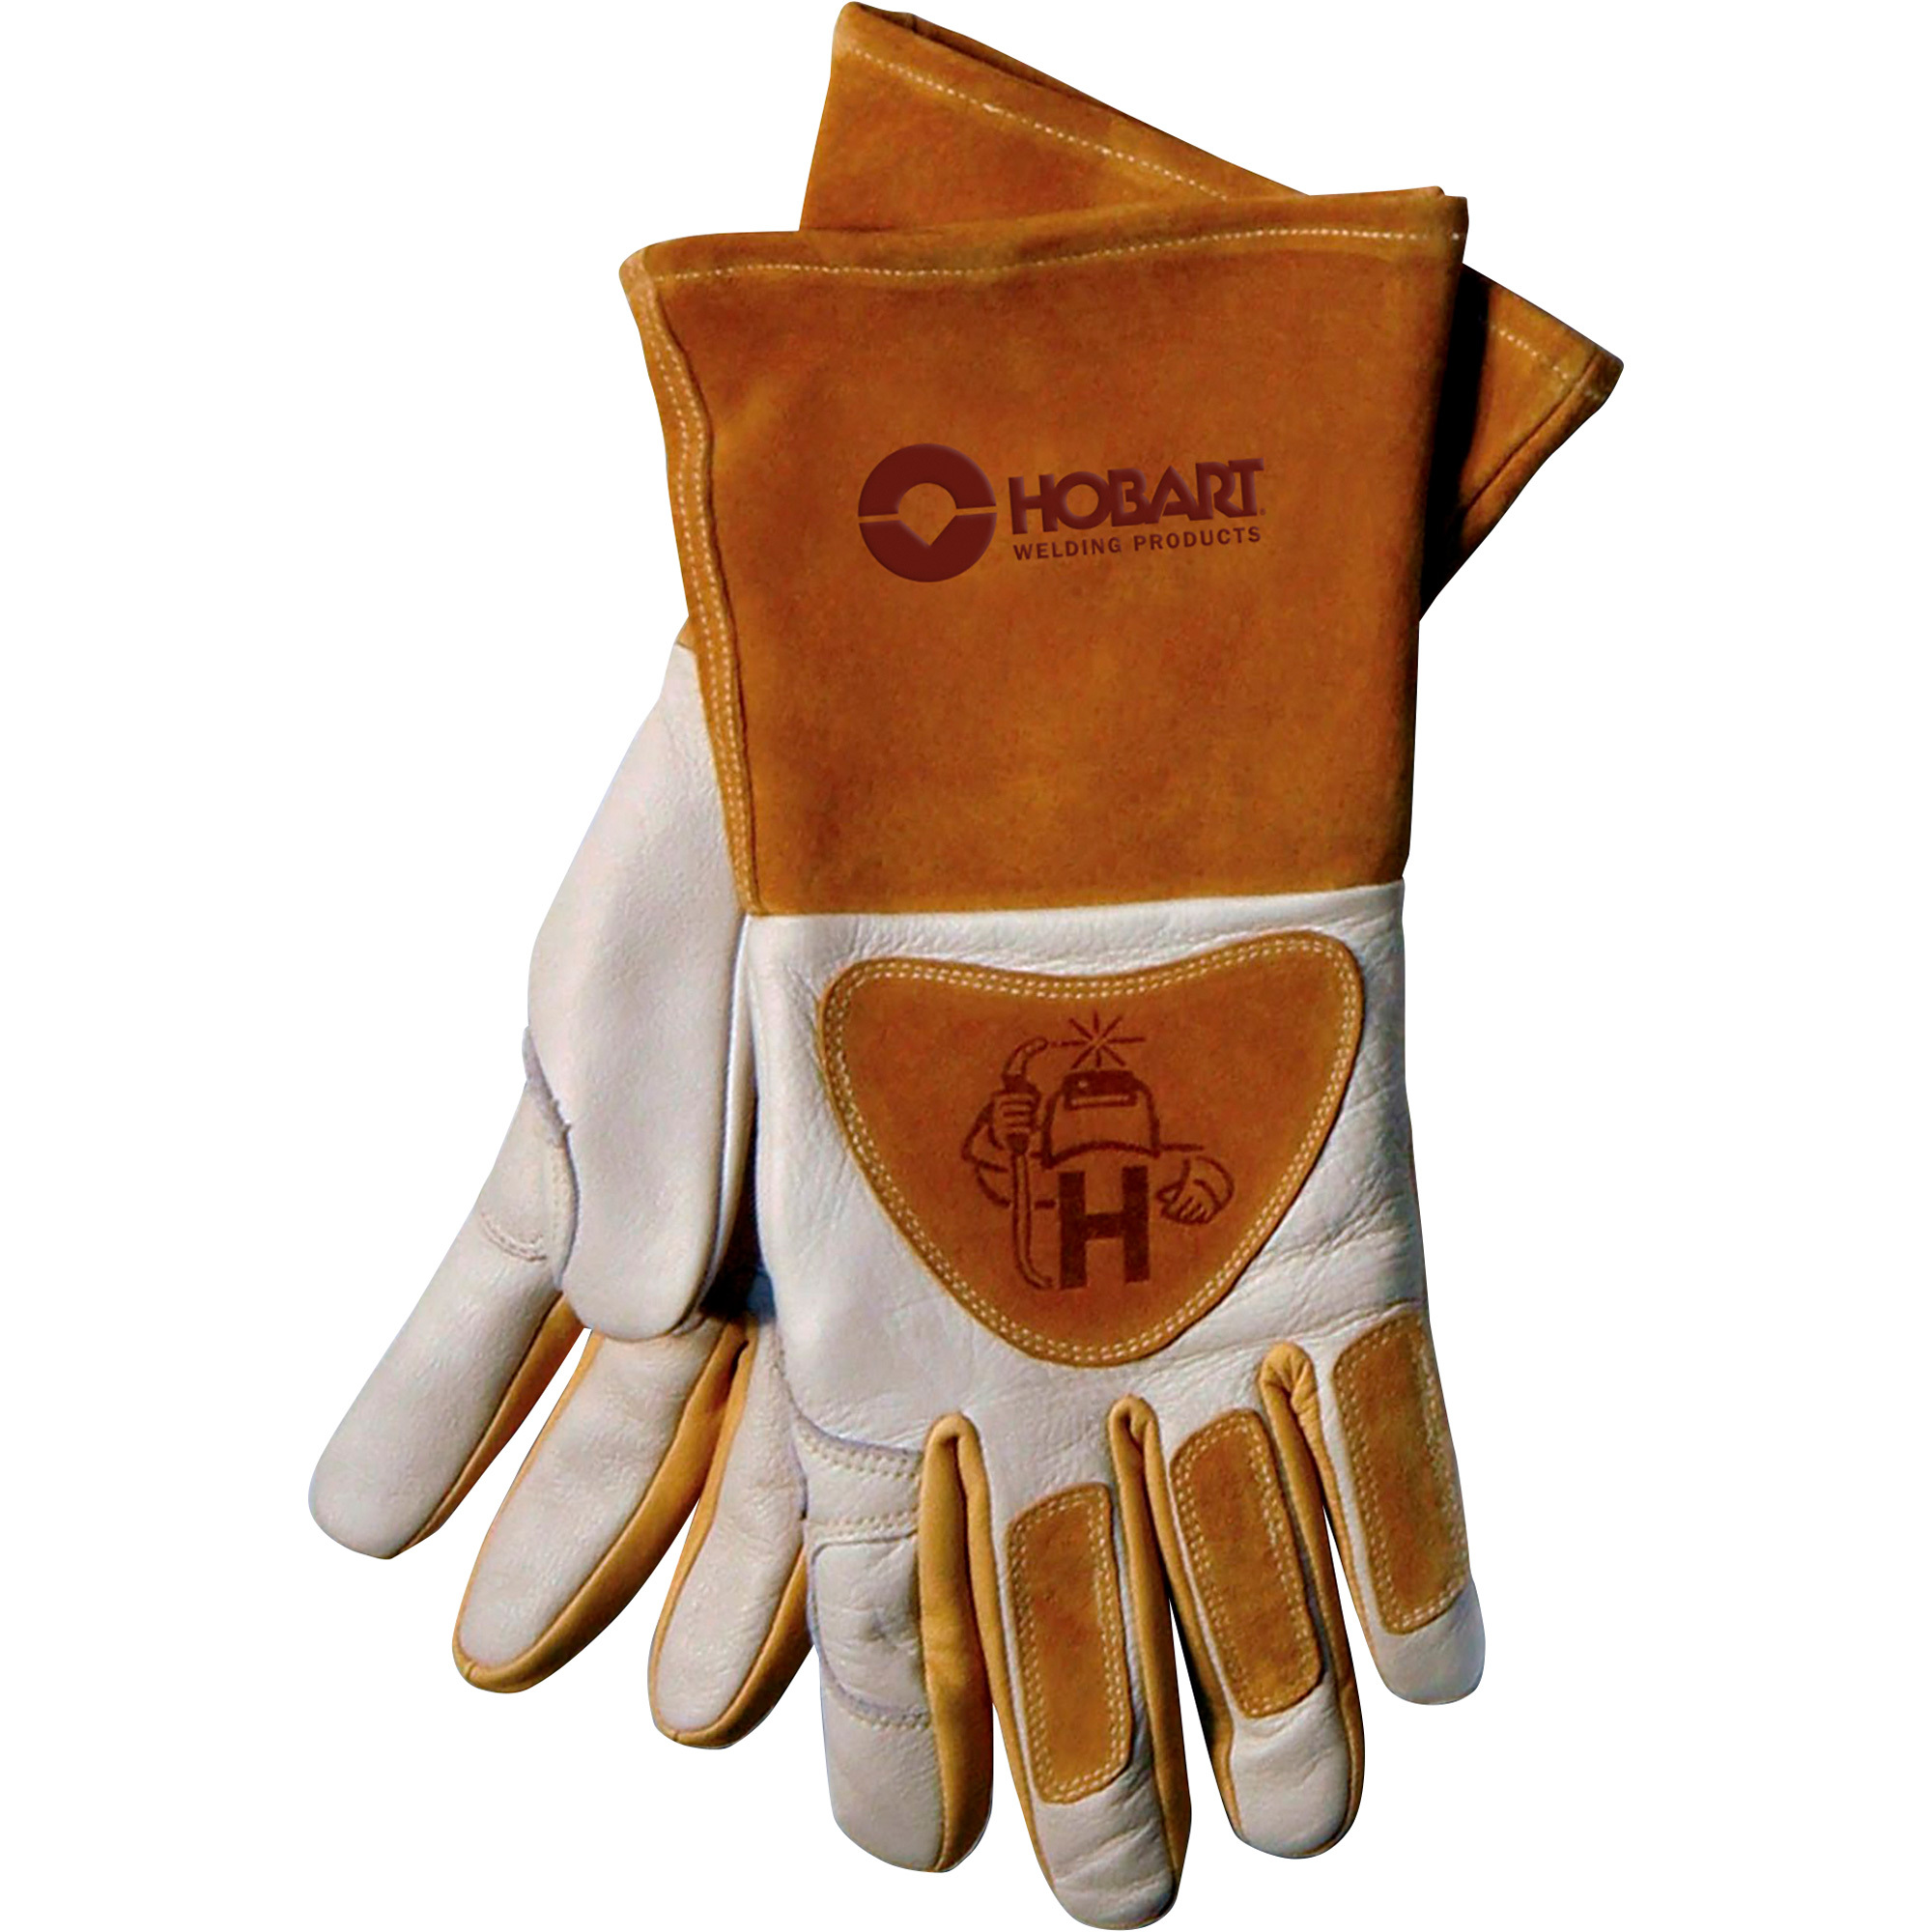 Hobart Premium Form-Fitted Welding Gloves â Leather, Beige and Brown, X-Large, Pair, Model 770440